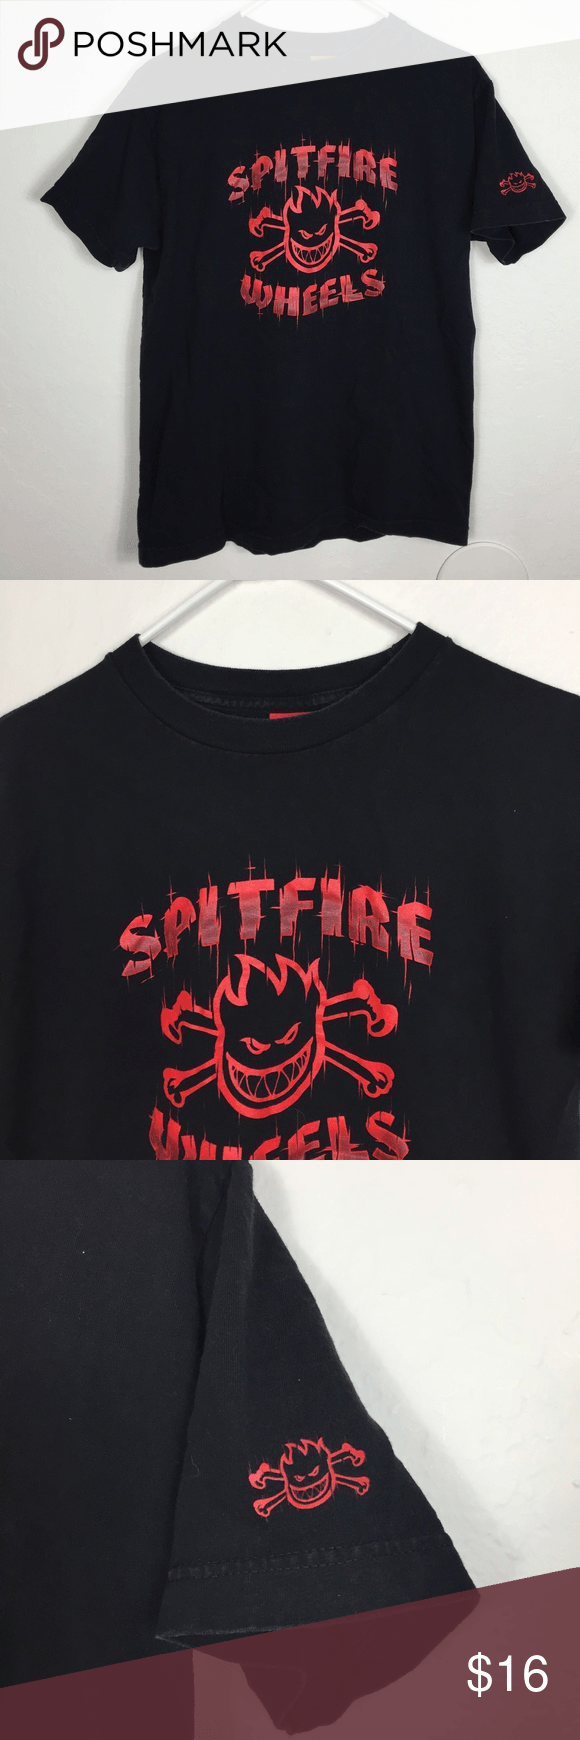 Black and Red Flame Logo - Mens M Spitfire Black Red Flame Logo Graphic Shirt Item: Men's